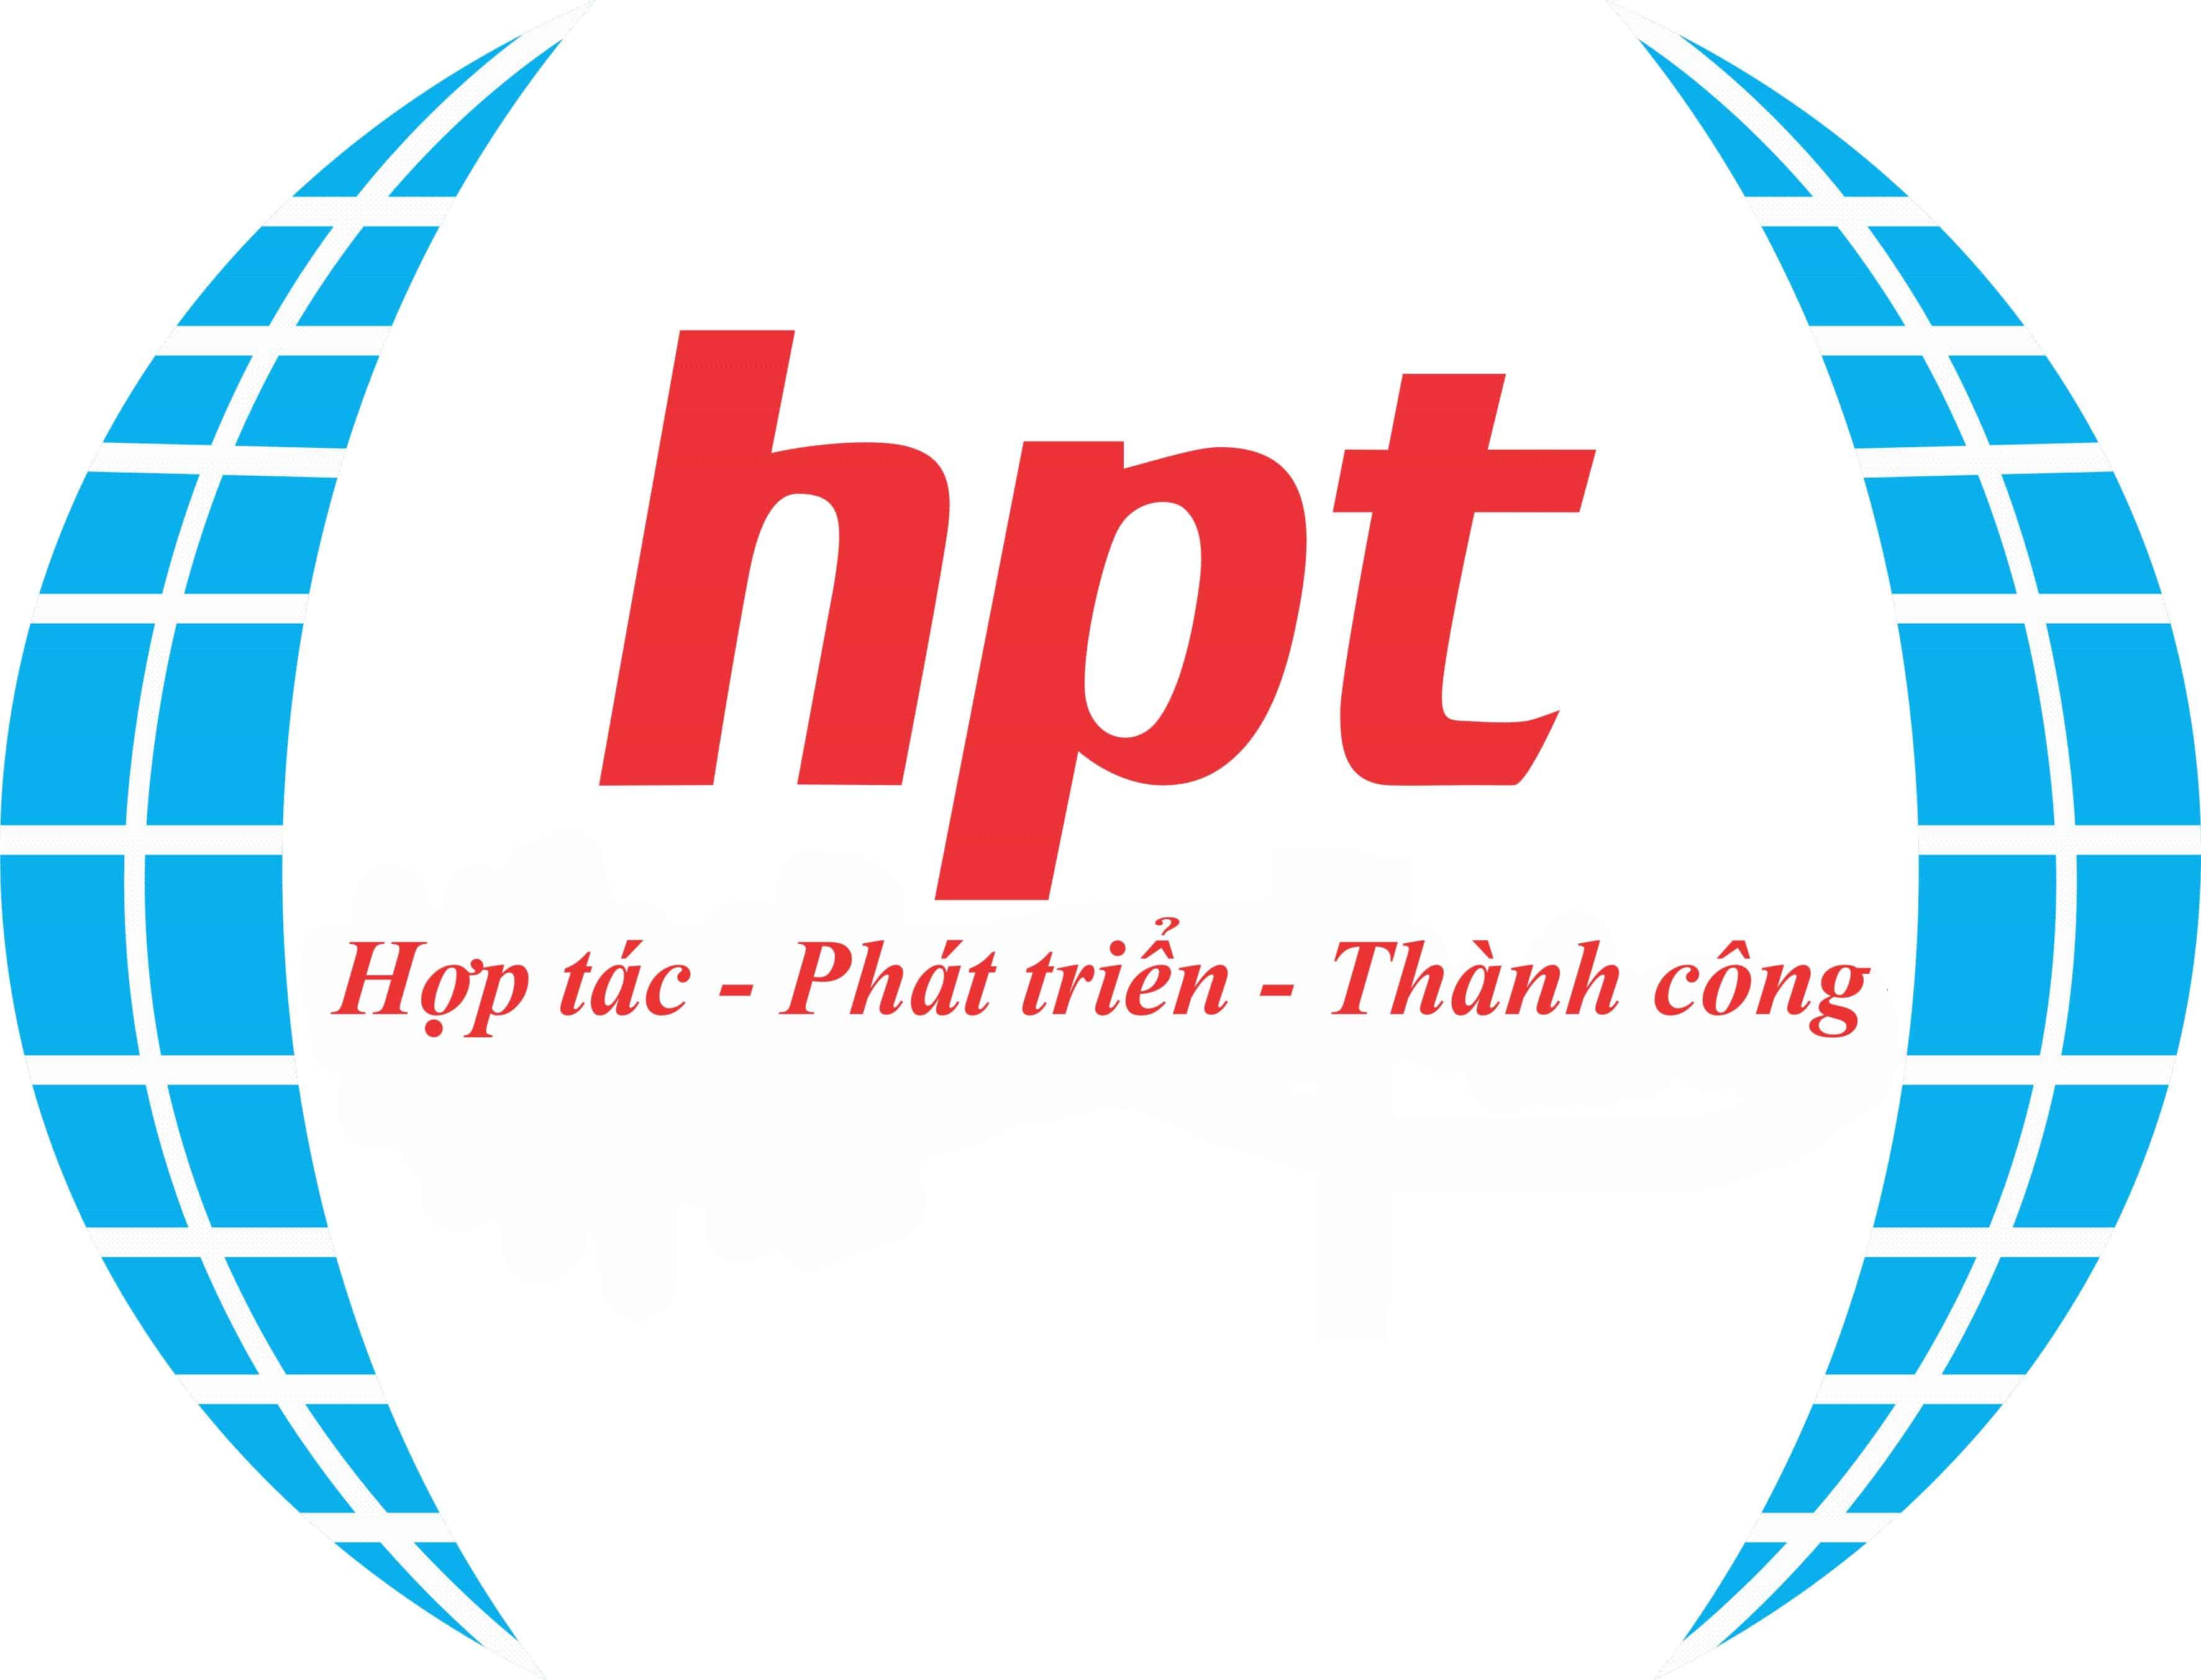 Camera quan sát HPT Việt Nam